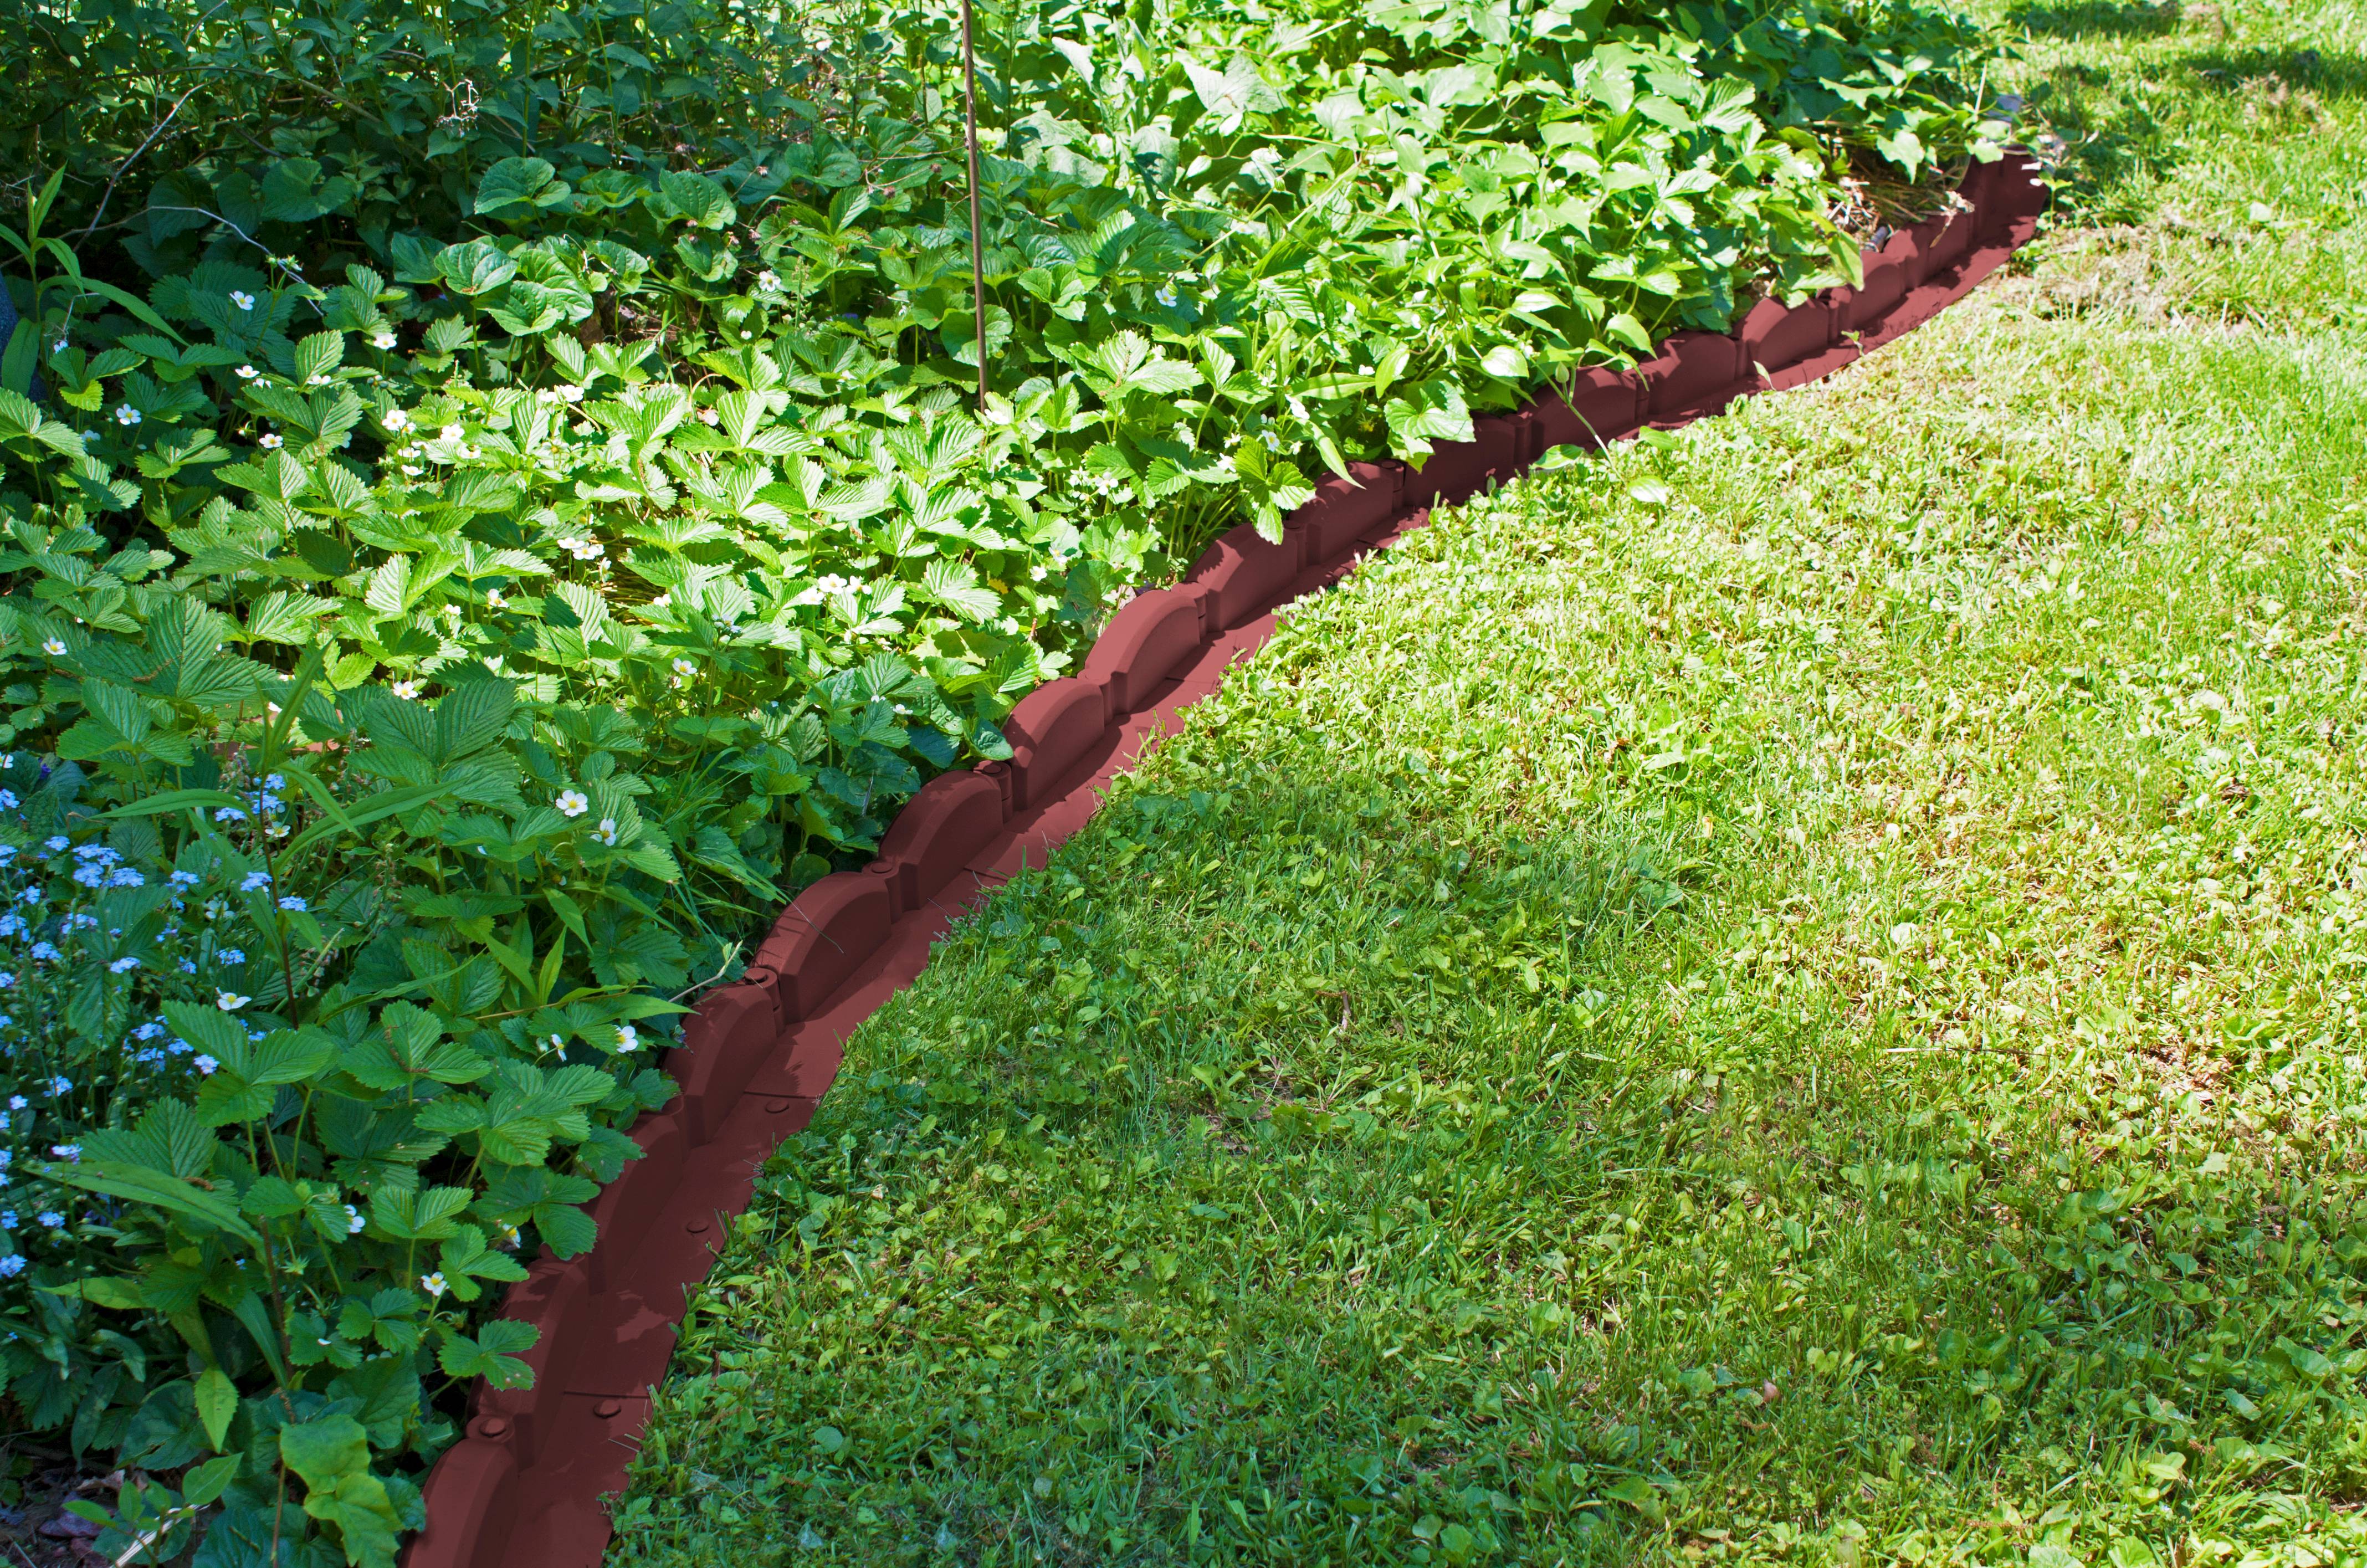 Trim Free Landscape Edging - 20' of Interlocking Adjustable Brick Sections - Blocks Grass and Weeds - Red Brick - image 2 of 9